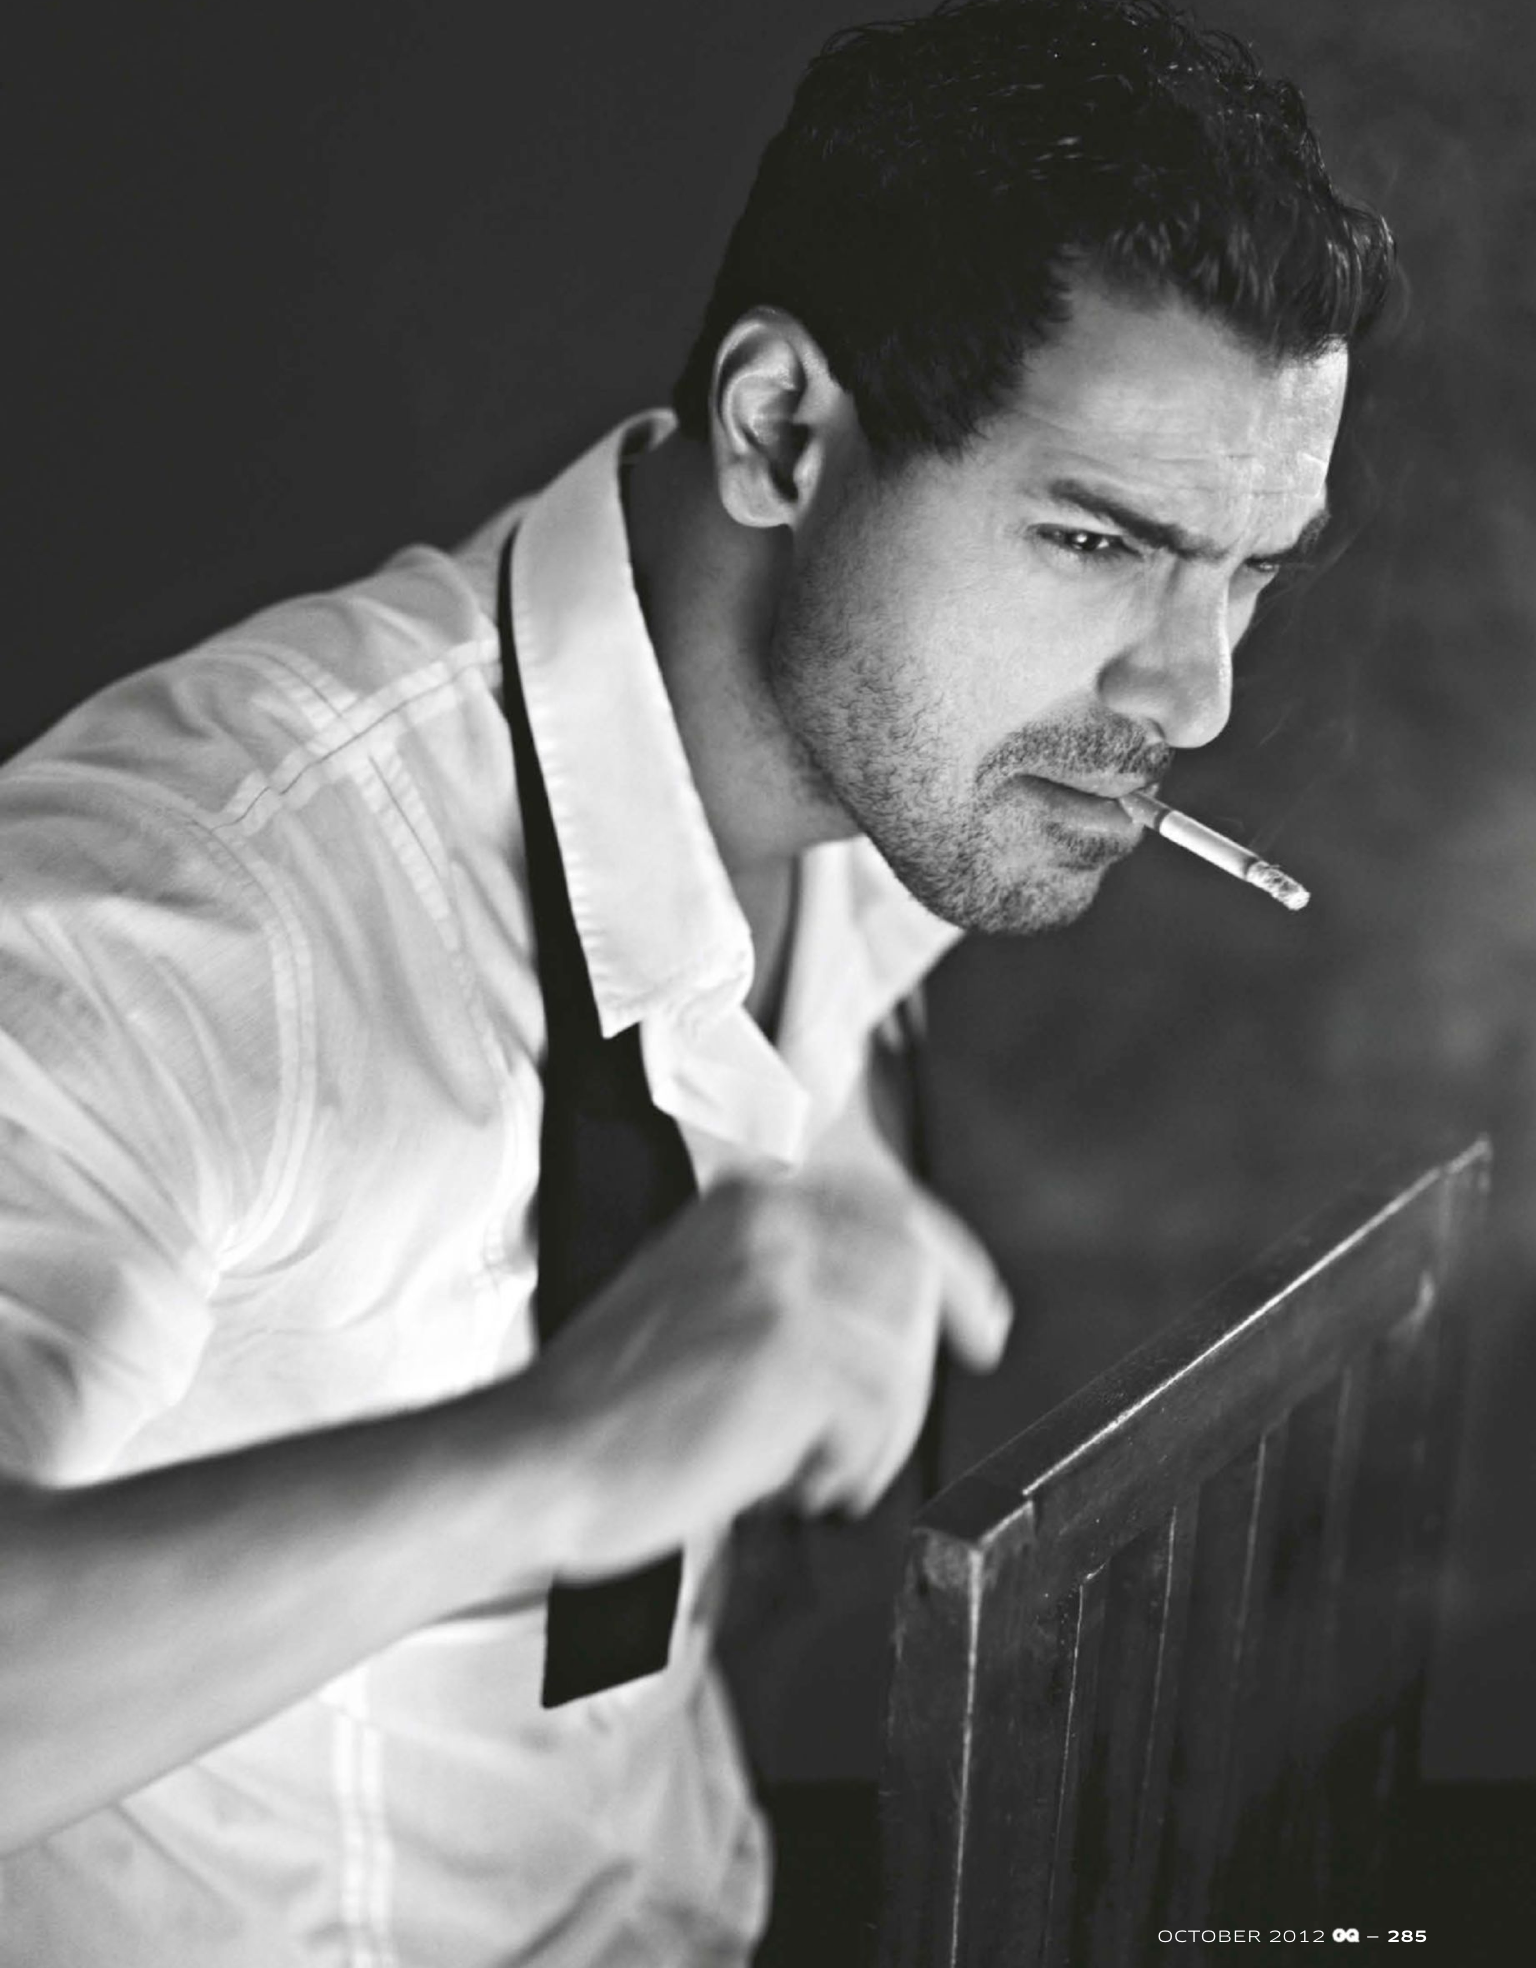 John Abraham Smoking pics Wallpaper, HD Celebrities 4K Wallpaper